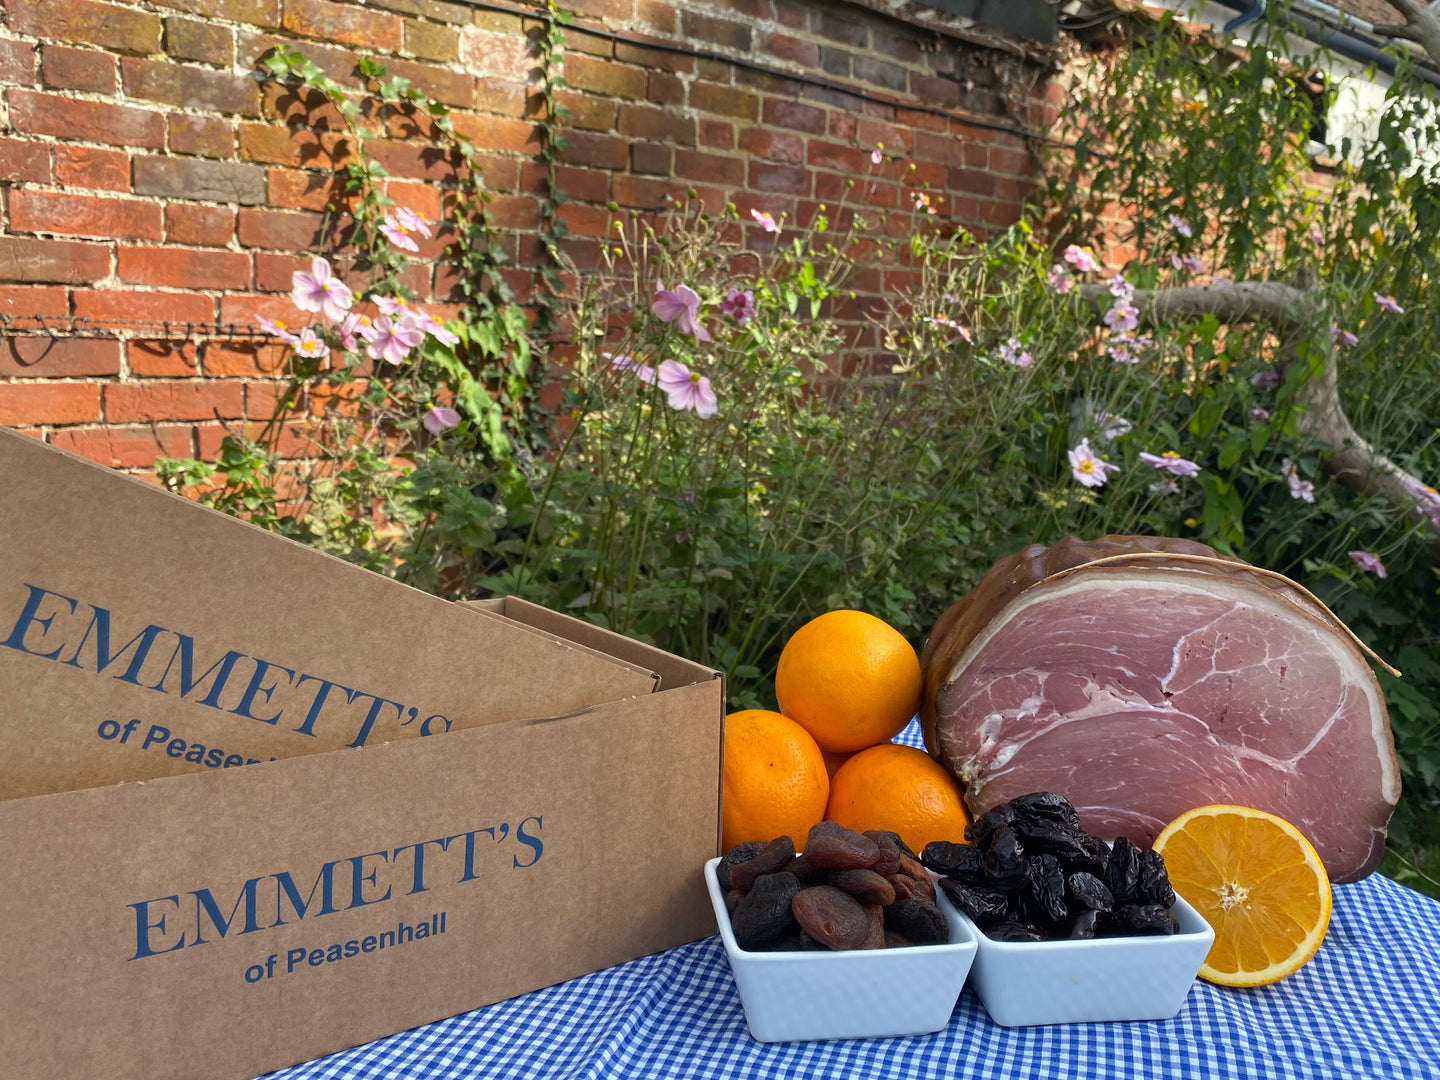 Emmett's Suffolk Black Gammon Gift Box - Emmett's